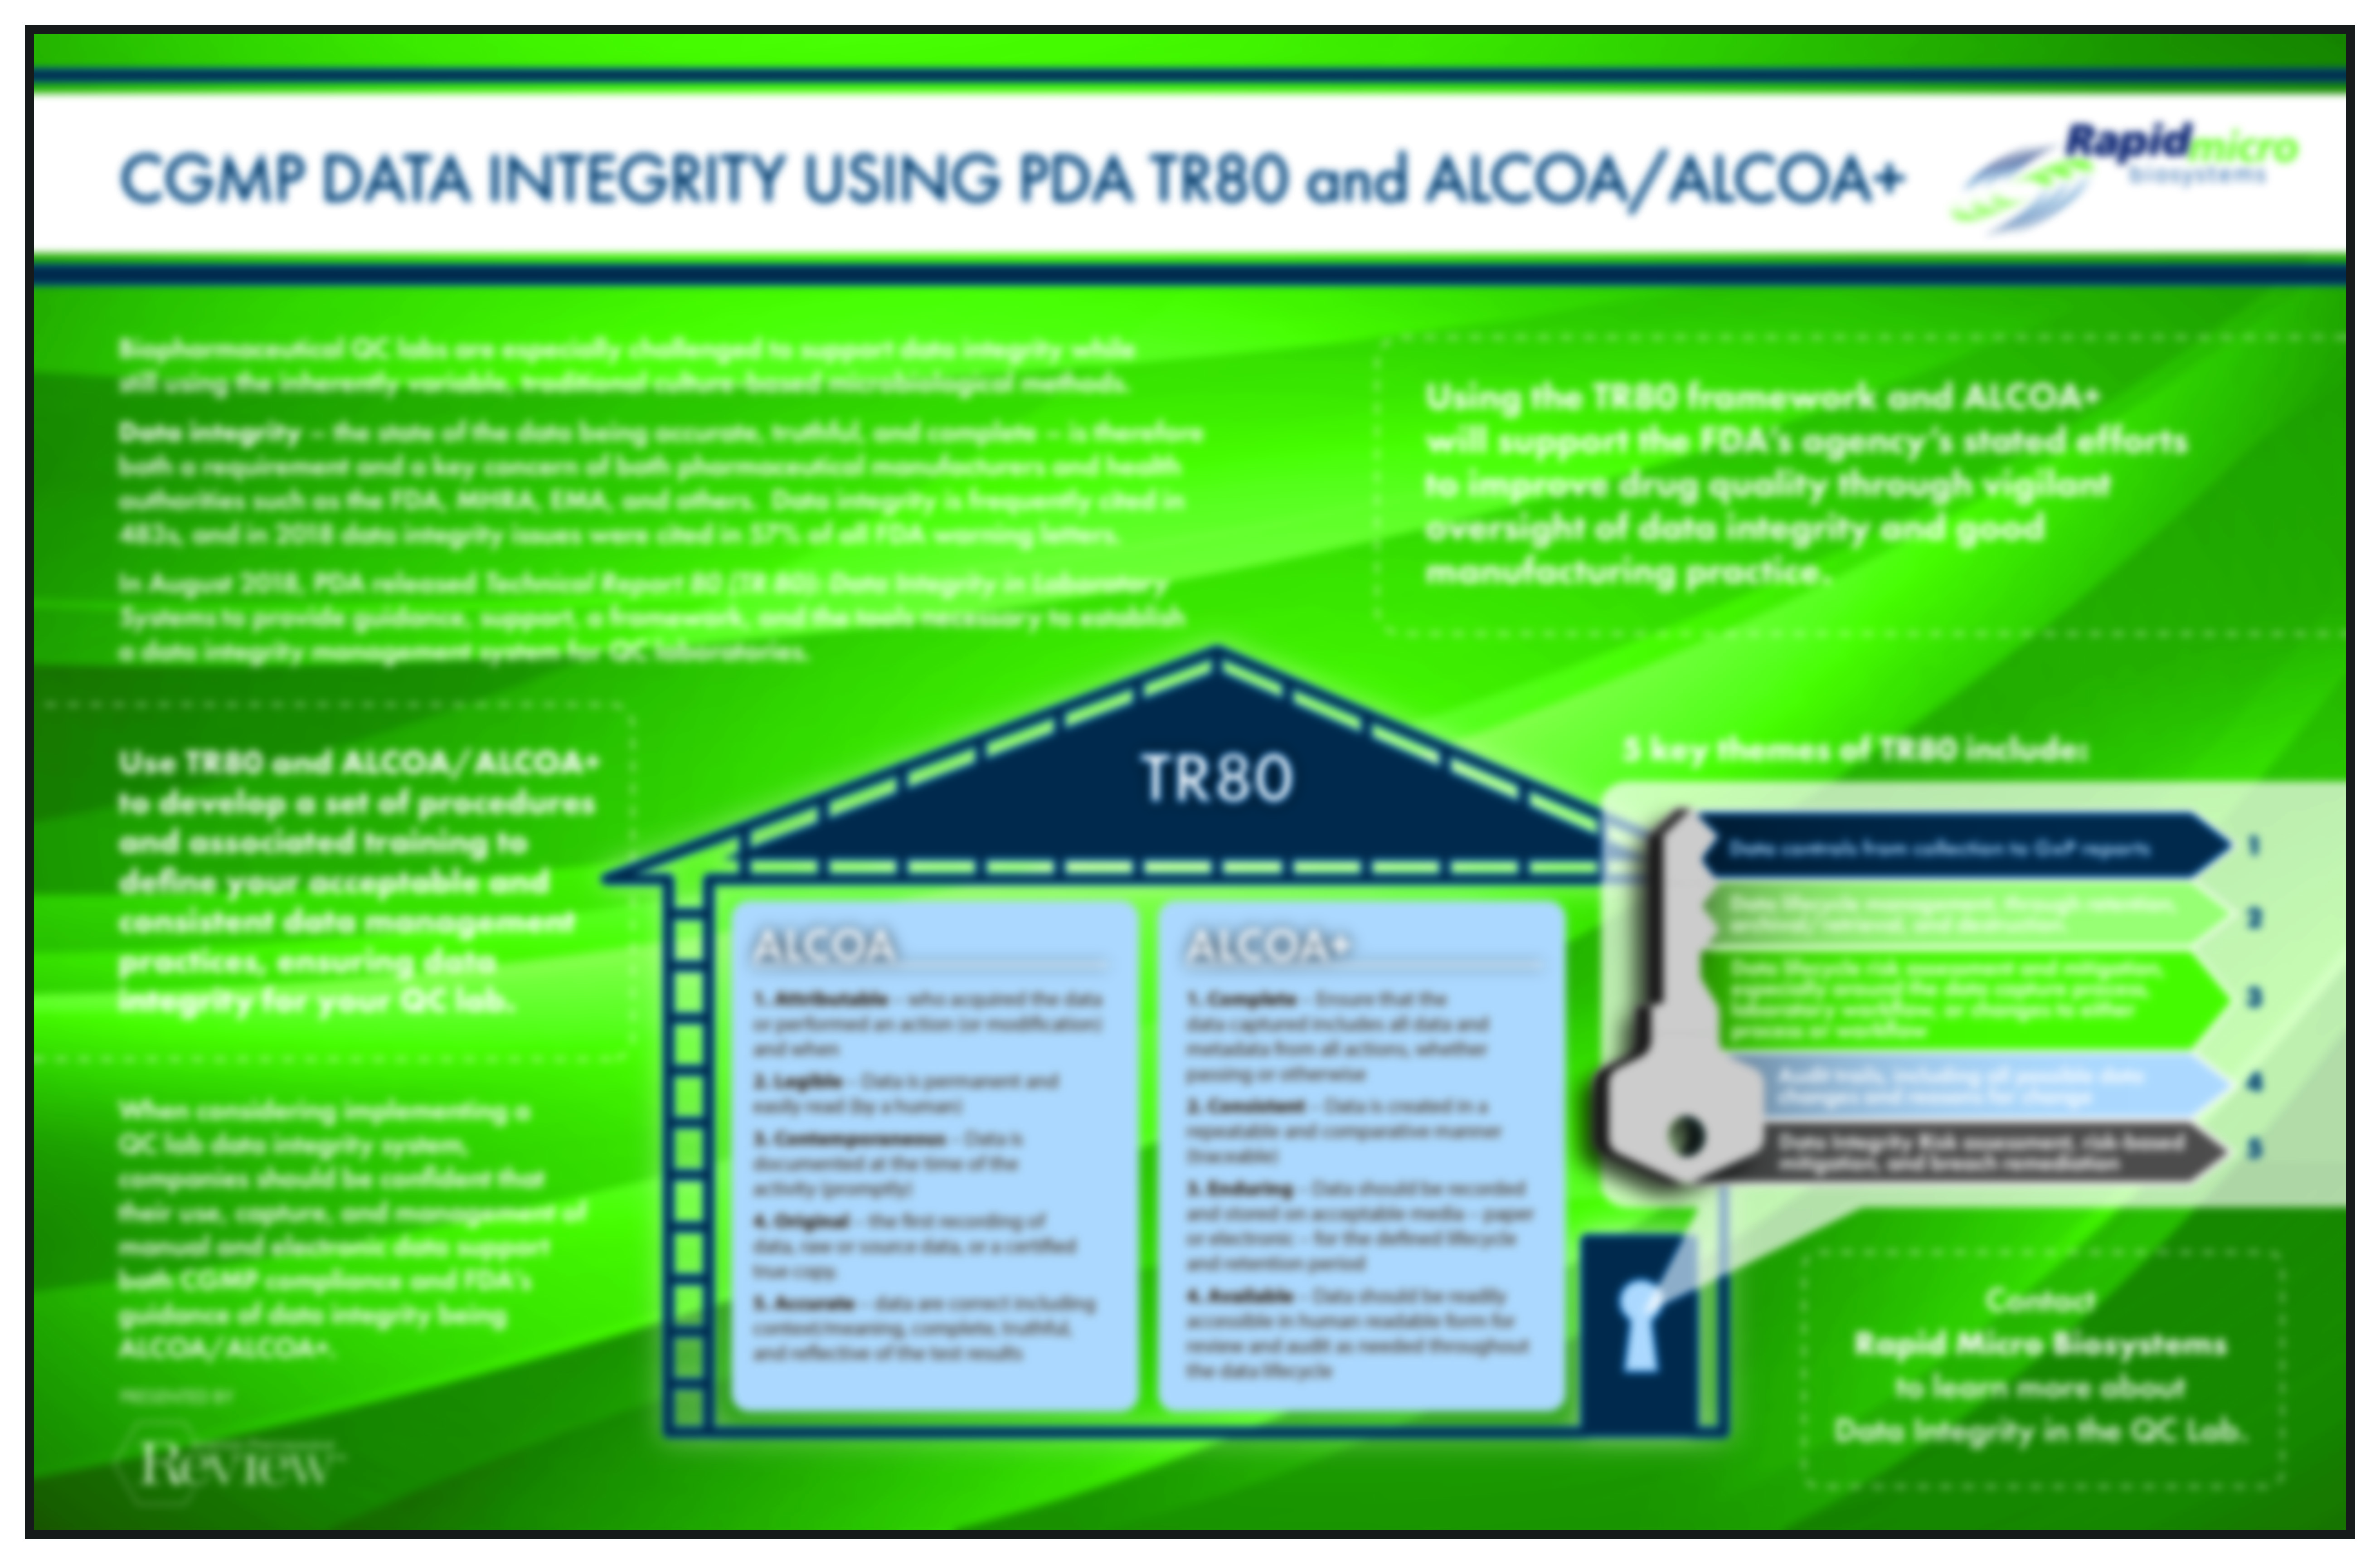 CGMP Data Integrity Using PDA TR80 and ALCOA ALCOA+- blurred-1